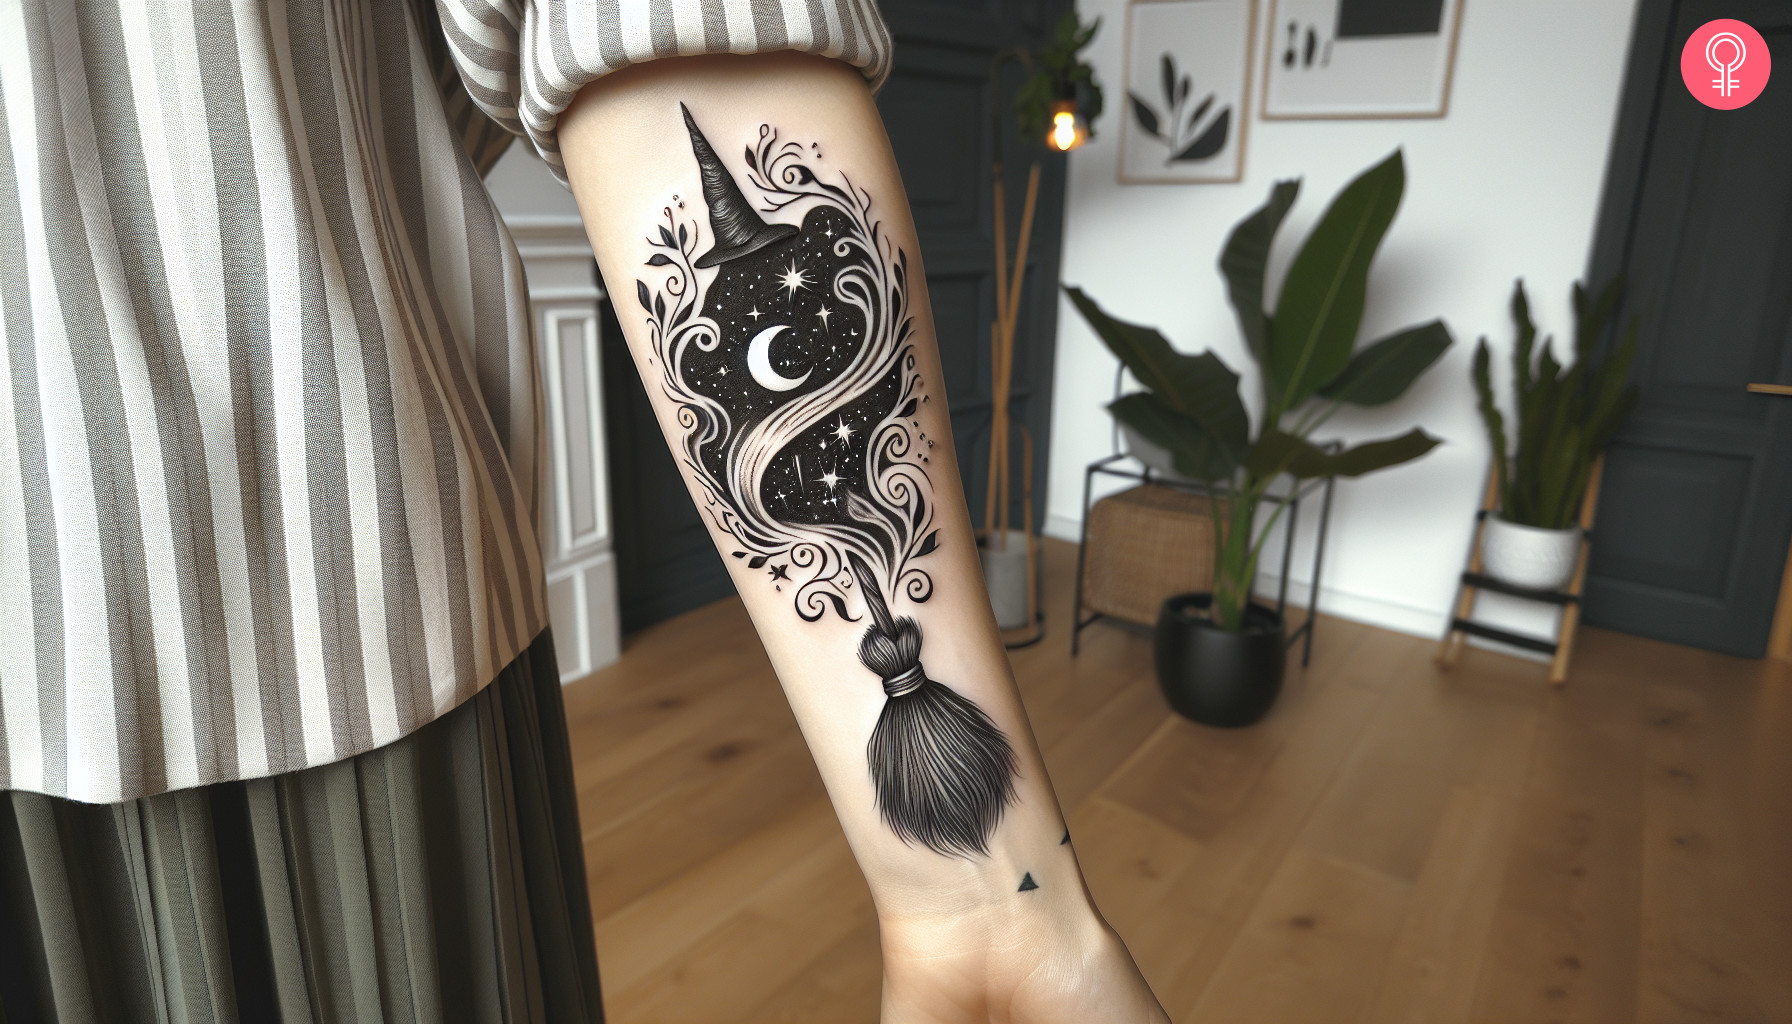 A mystical fantasy tattoo on the forearm